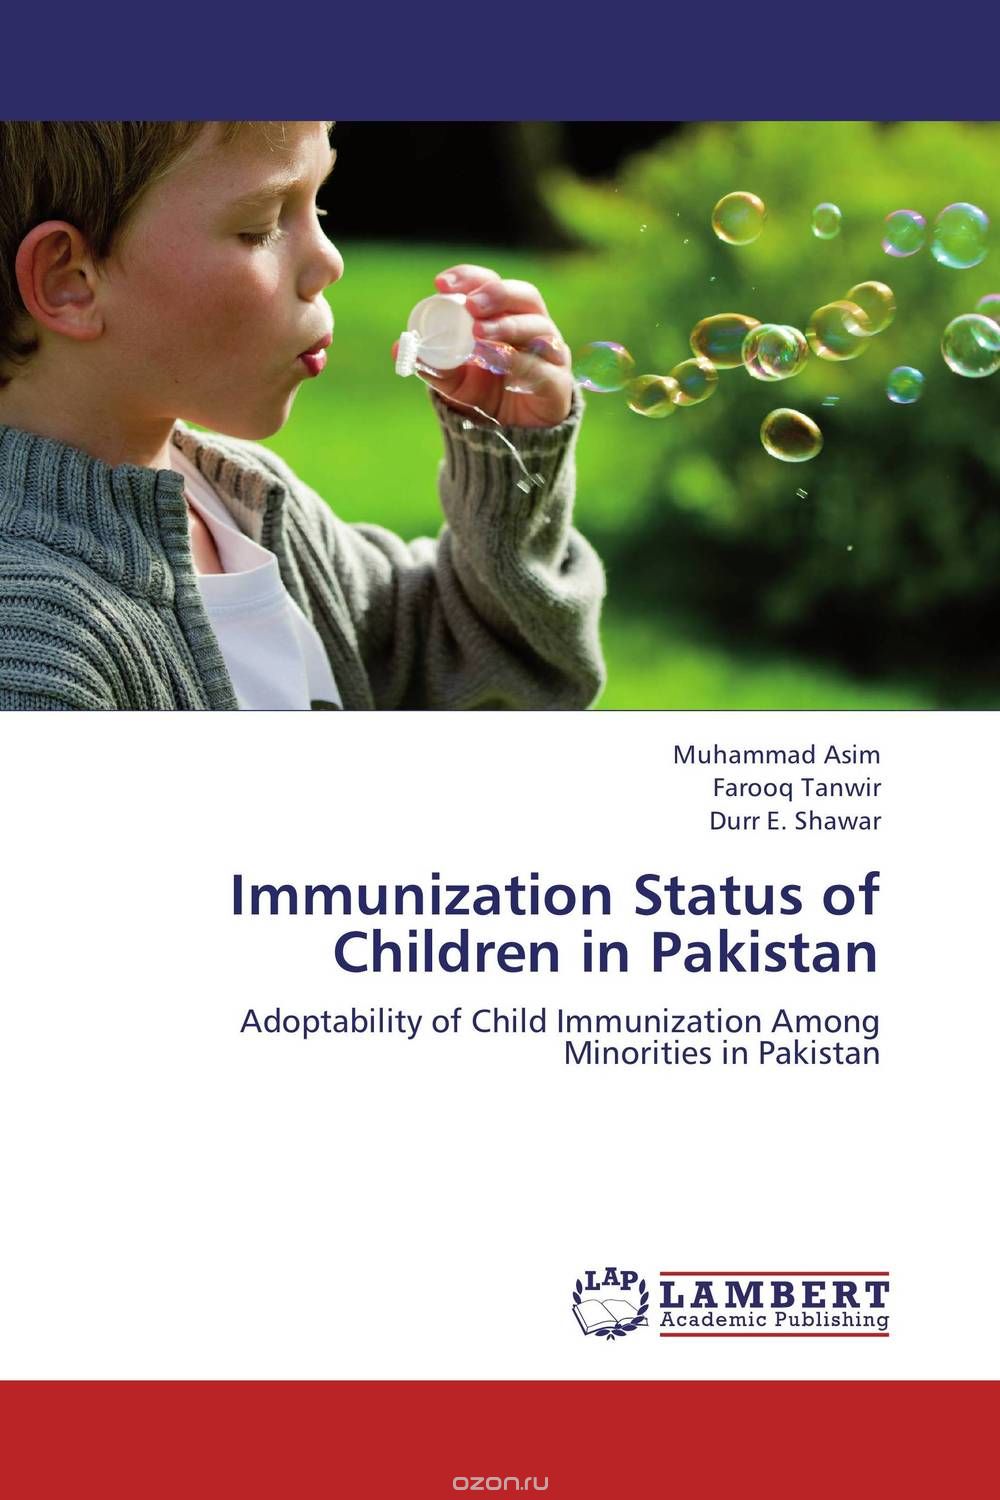 Скачать книгу "Immunization Status of Children in Pakistan"